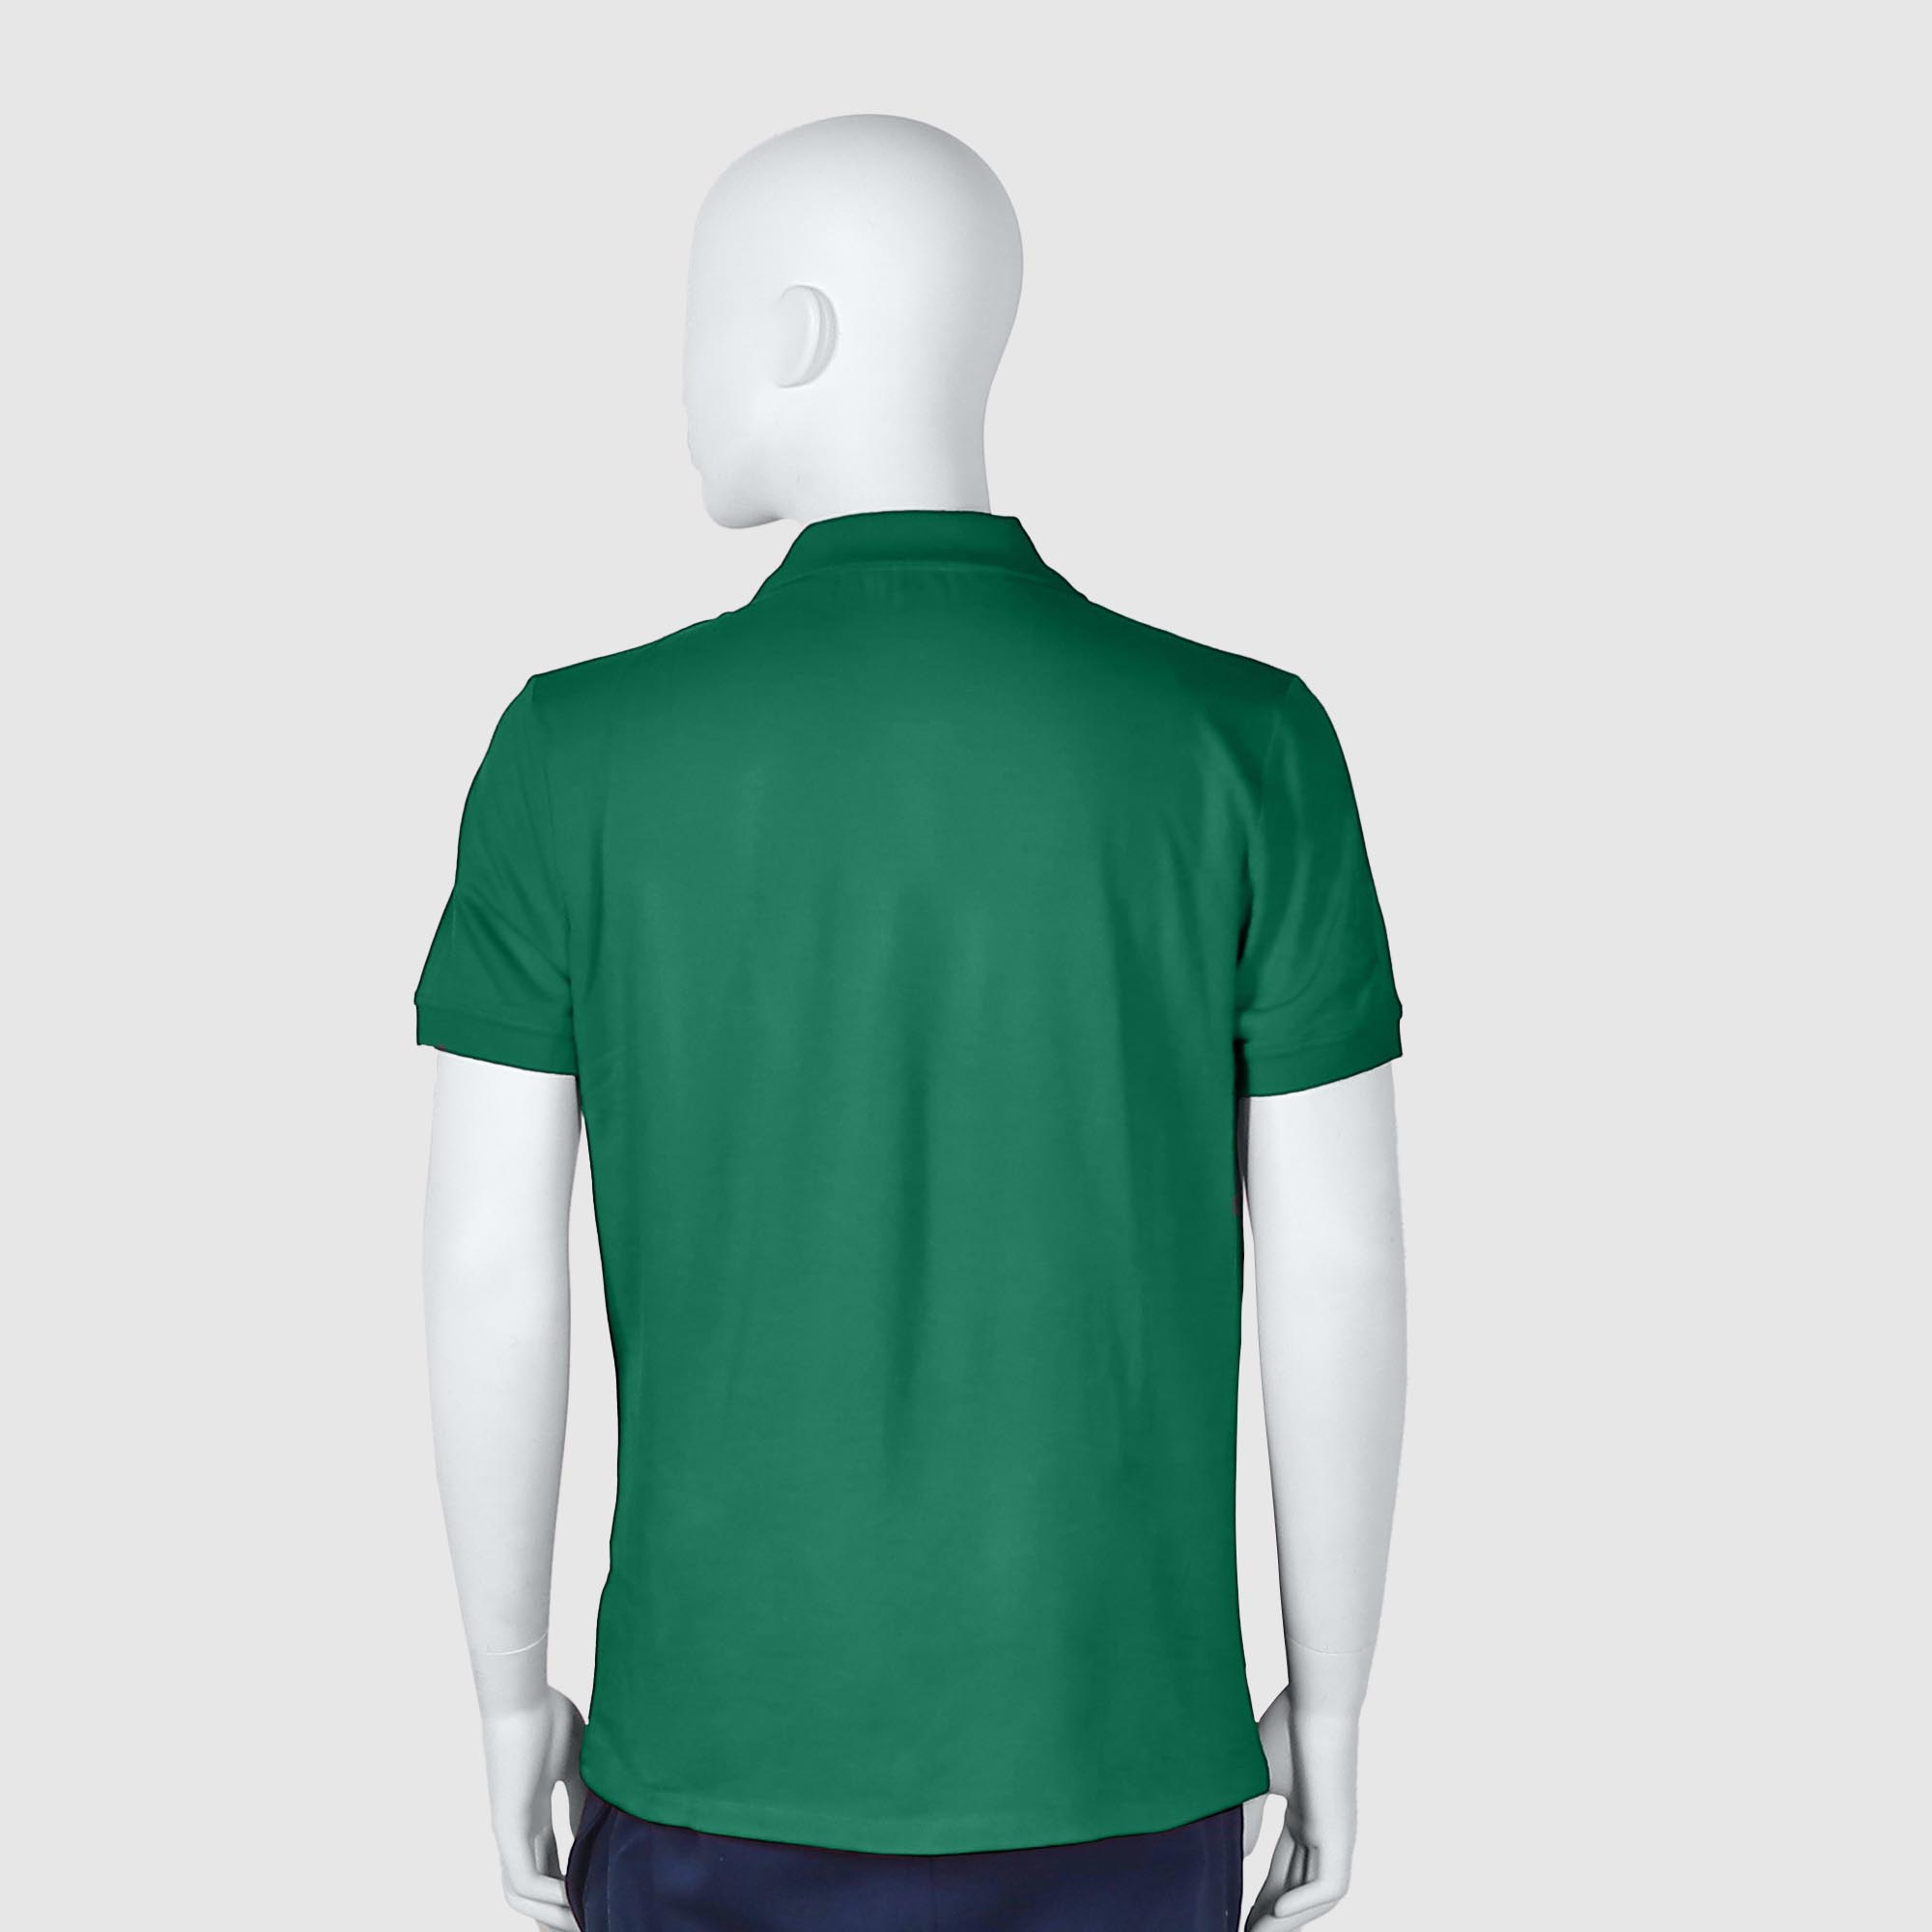 Мужская футболка-поло Diva Teks зелёная (DTD-09), цвет зелёный, размер 44-46 - фото 2